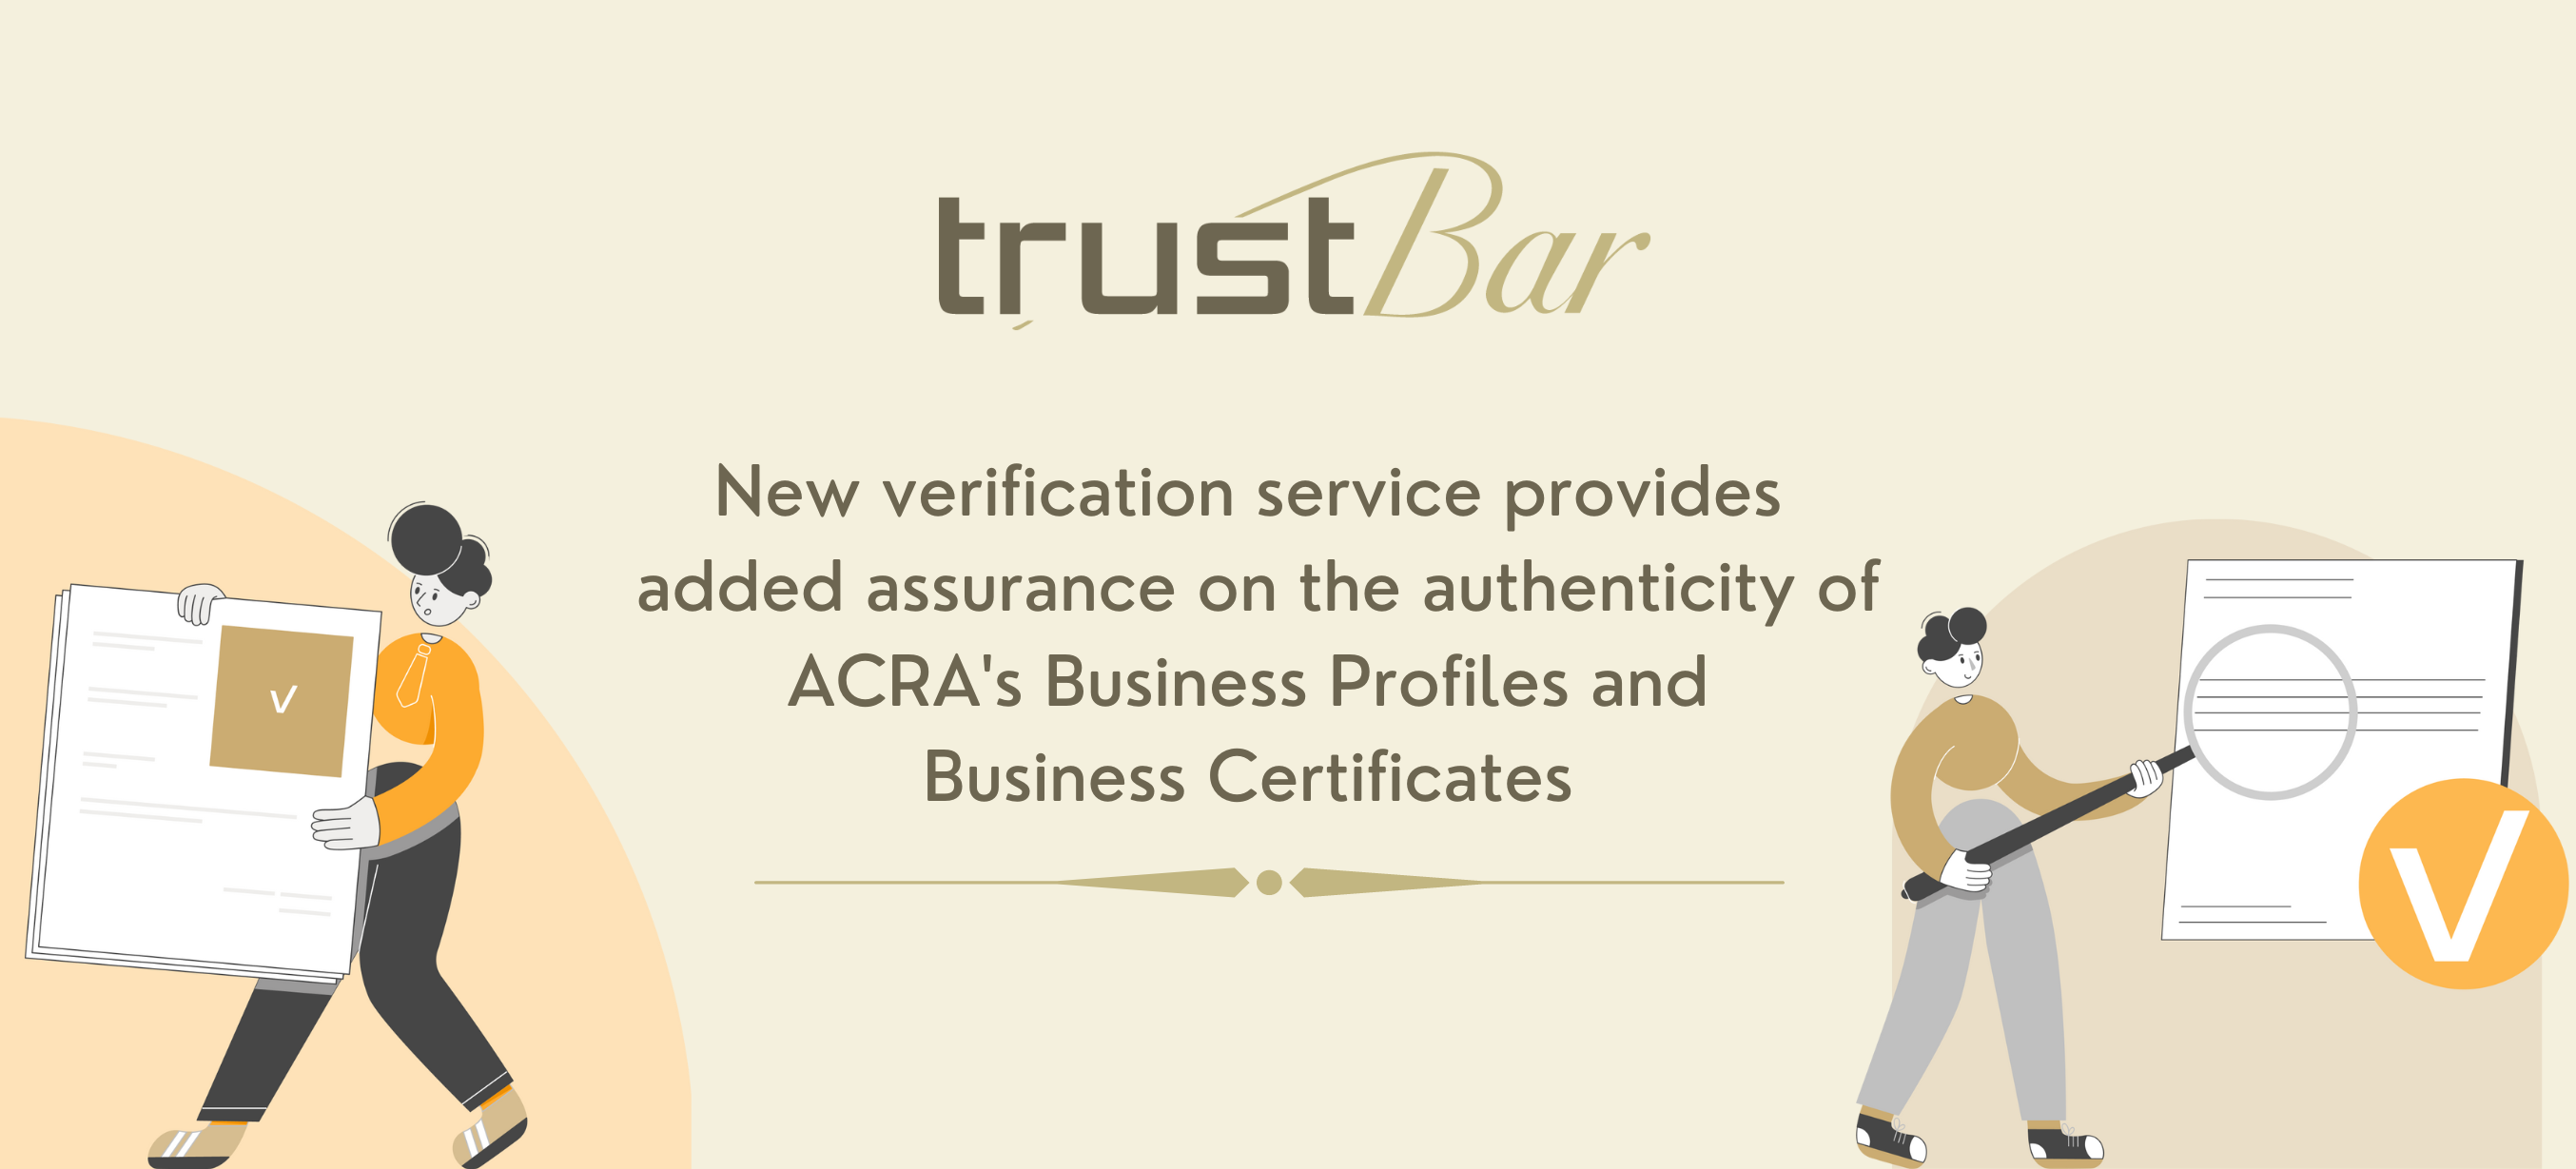 ACRA New verification service